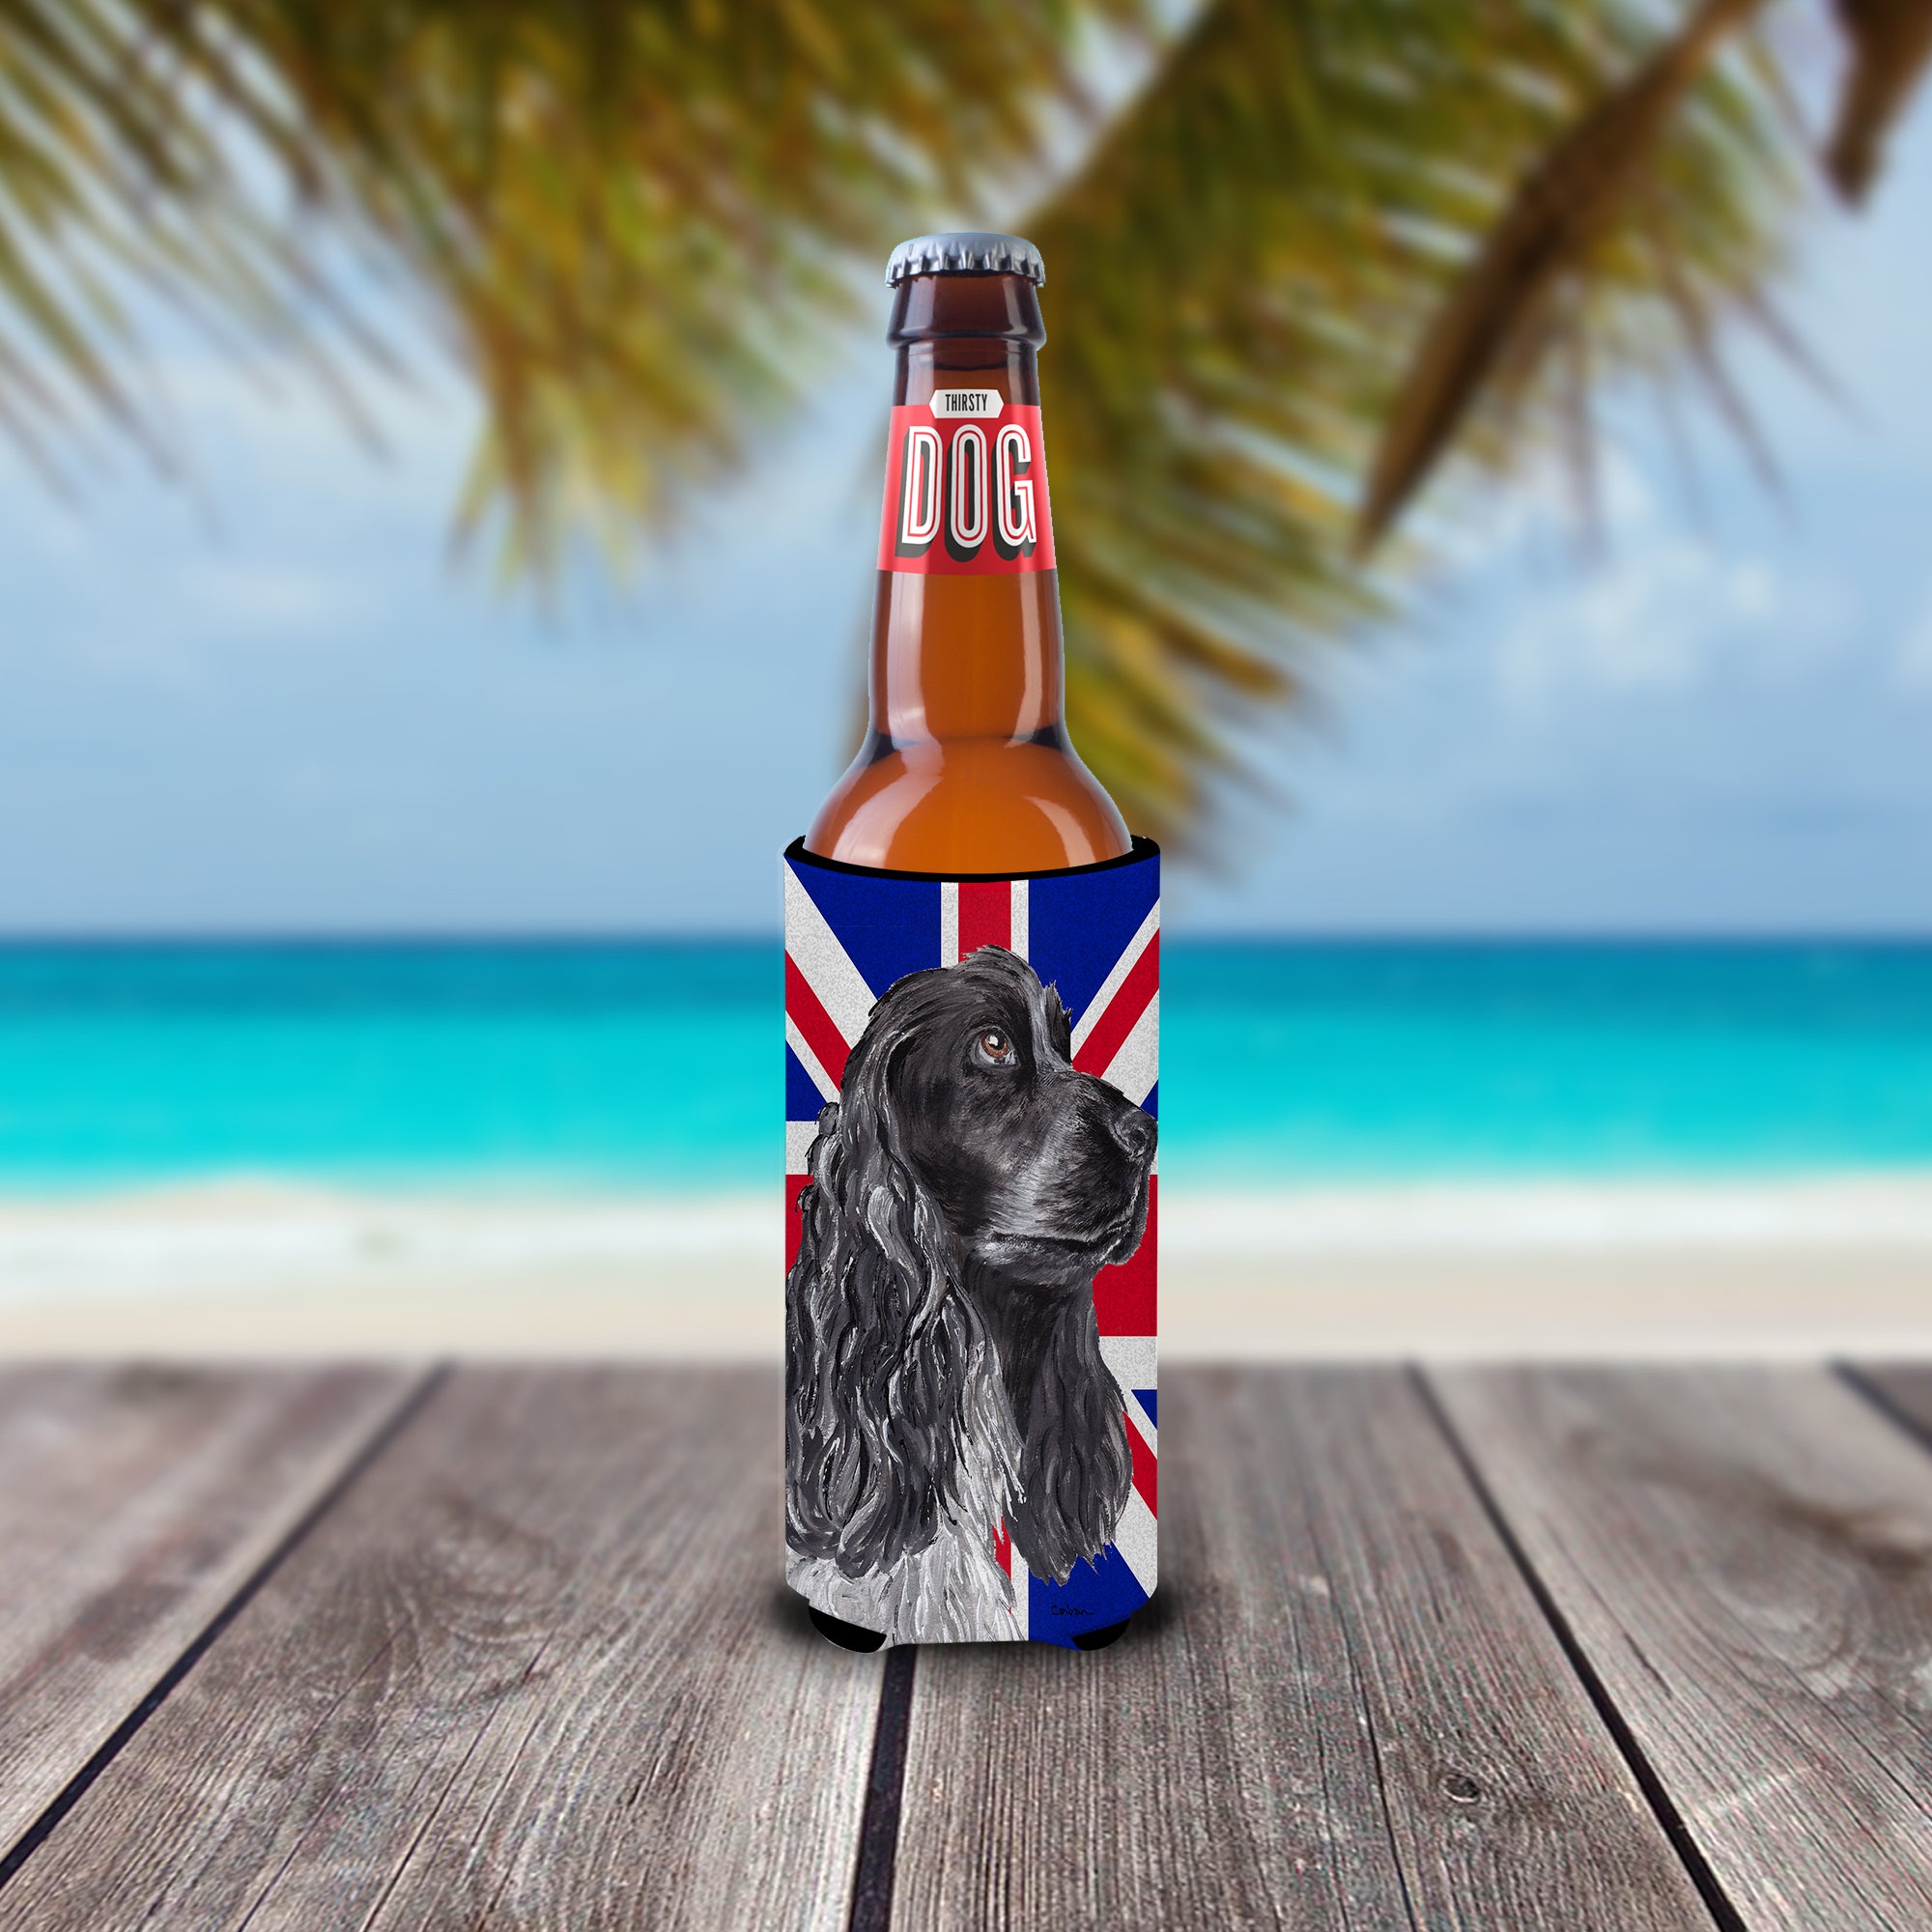 Black Cocker Spaniel with Engish Union Jack British Flag Ultra Beverage Insulators for slim cans SC9868MUK